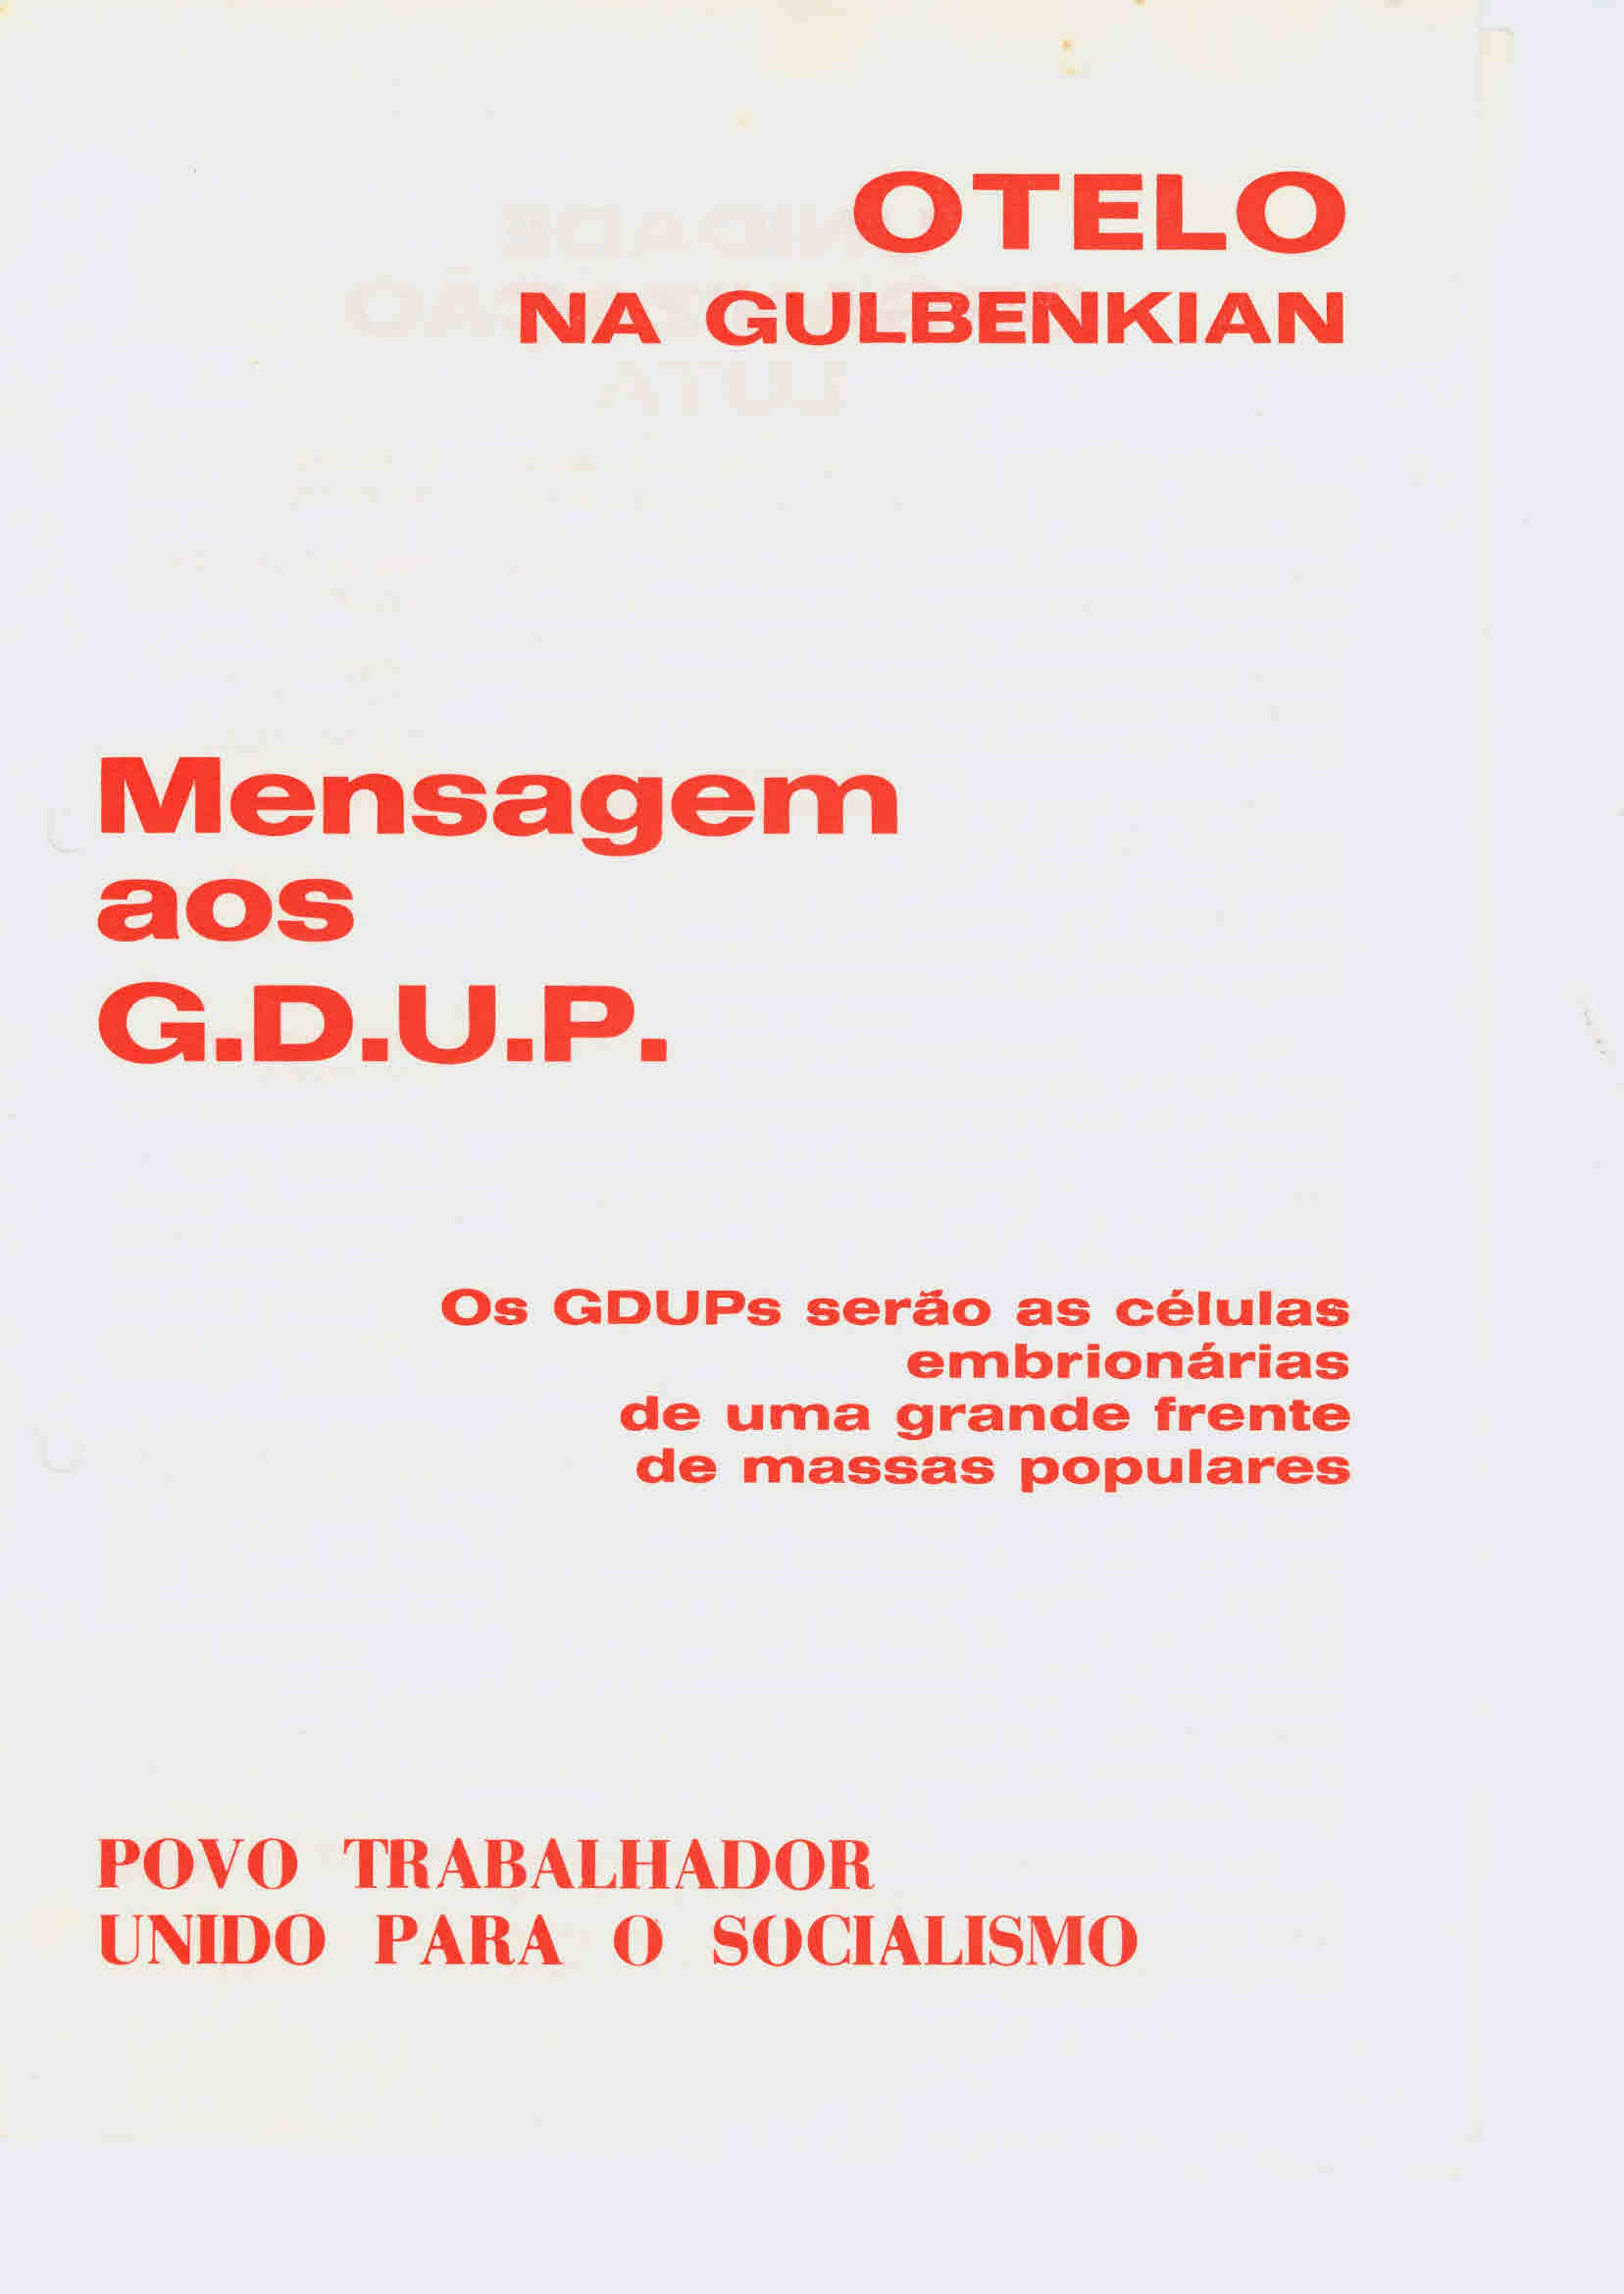 Copy of Otelo na Gulbenkian